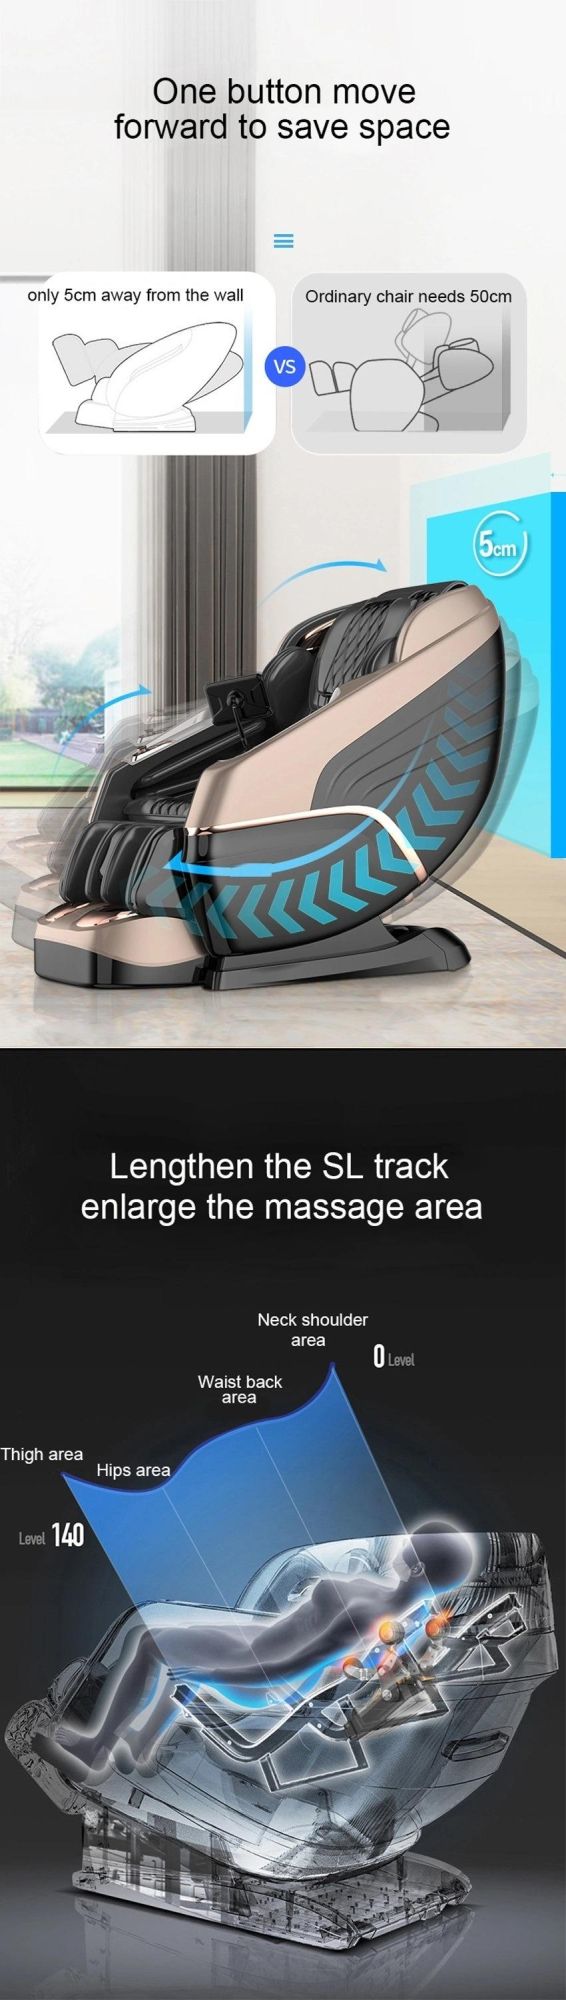 Sauron 888 Zero Gravity Electronic Massage Chair Full Body Massager